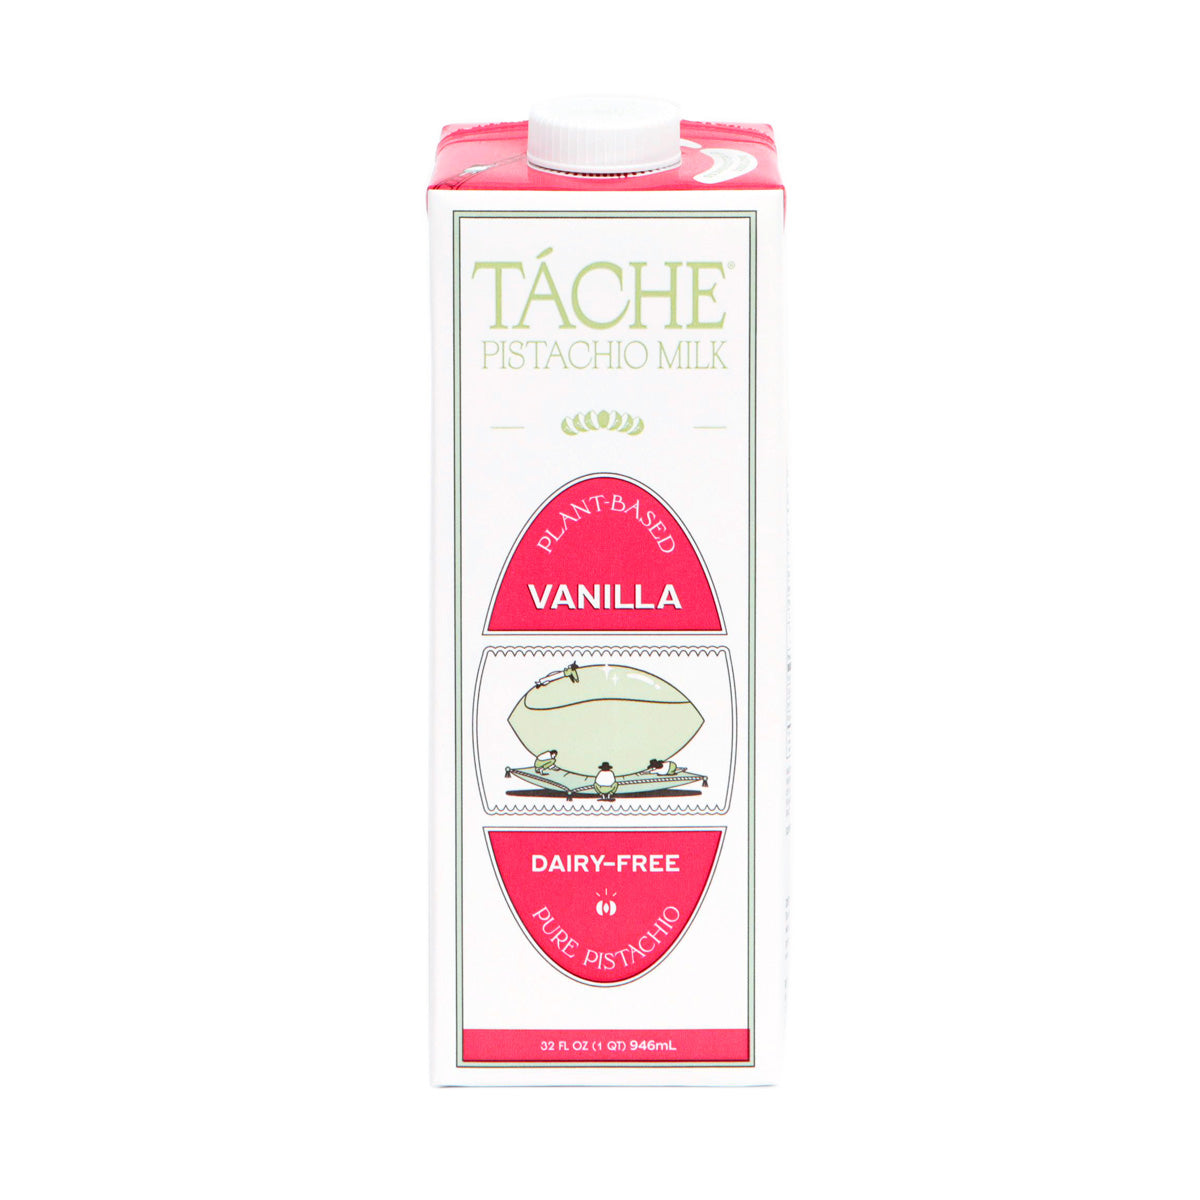 Tache Vanilla Pistachio Milk 32 OZ